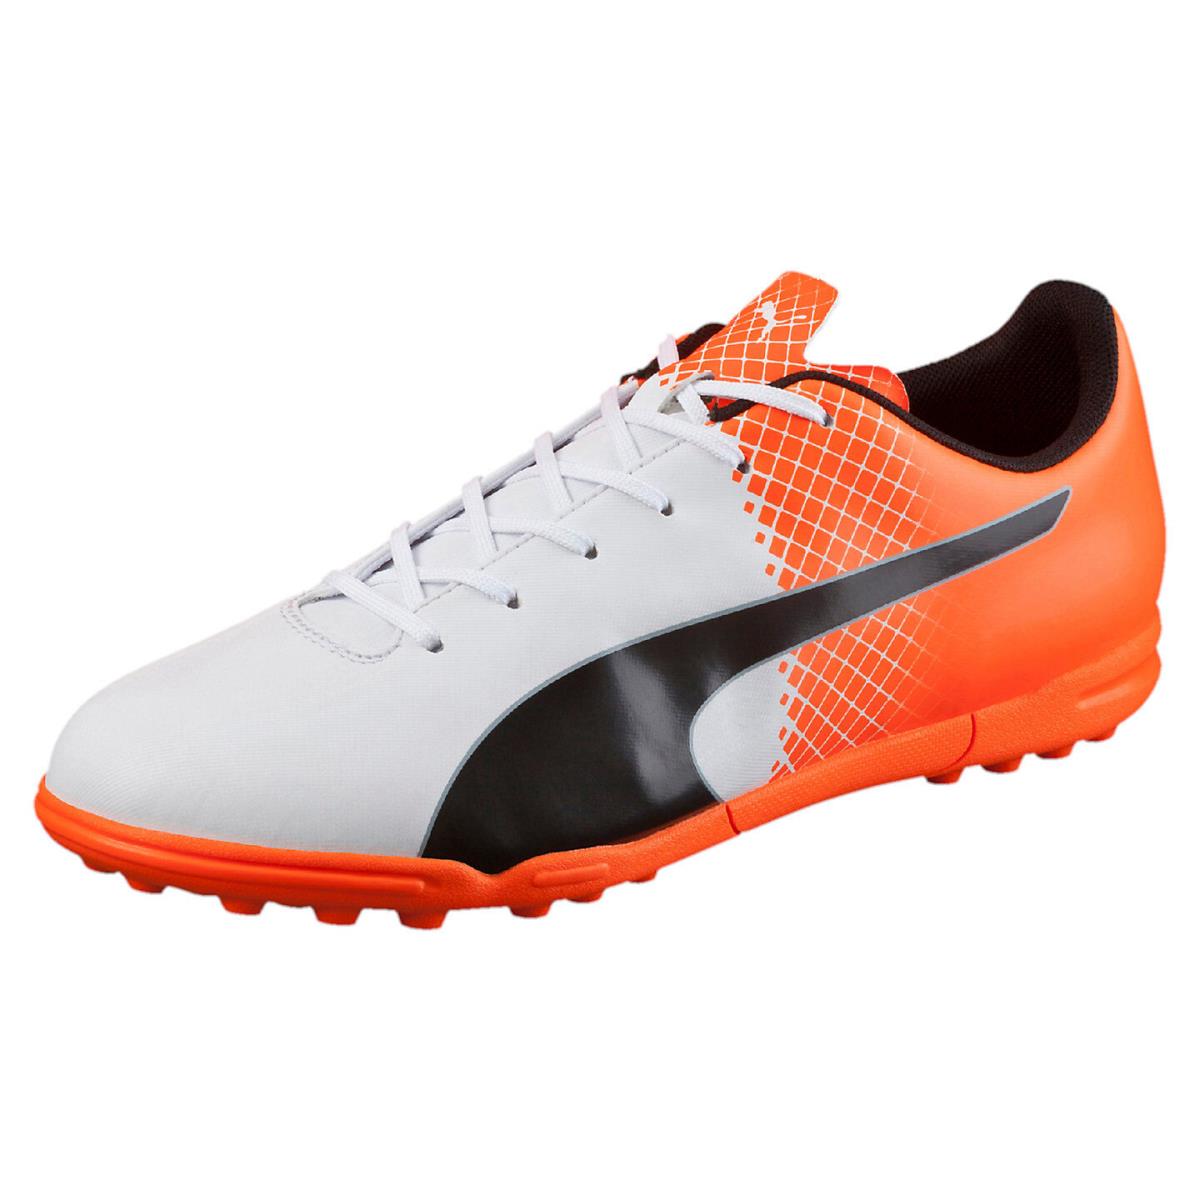 Men`s Puma Evospeed 5.5 Tricks Turf Soccer Shoes 103591 05 Size 13 White/bla - Puma White-Puma Black-Shocking Orange